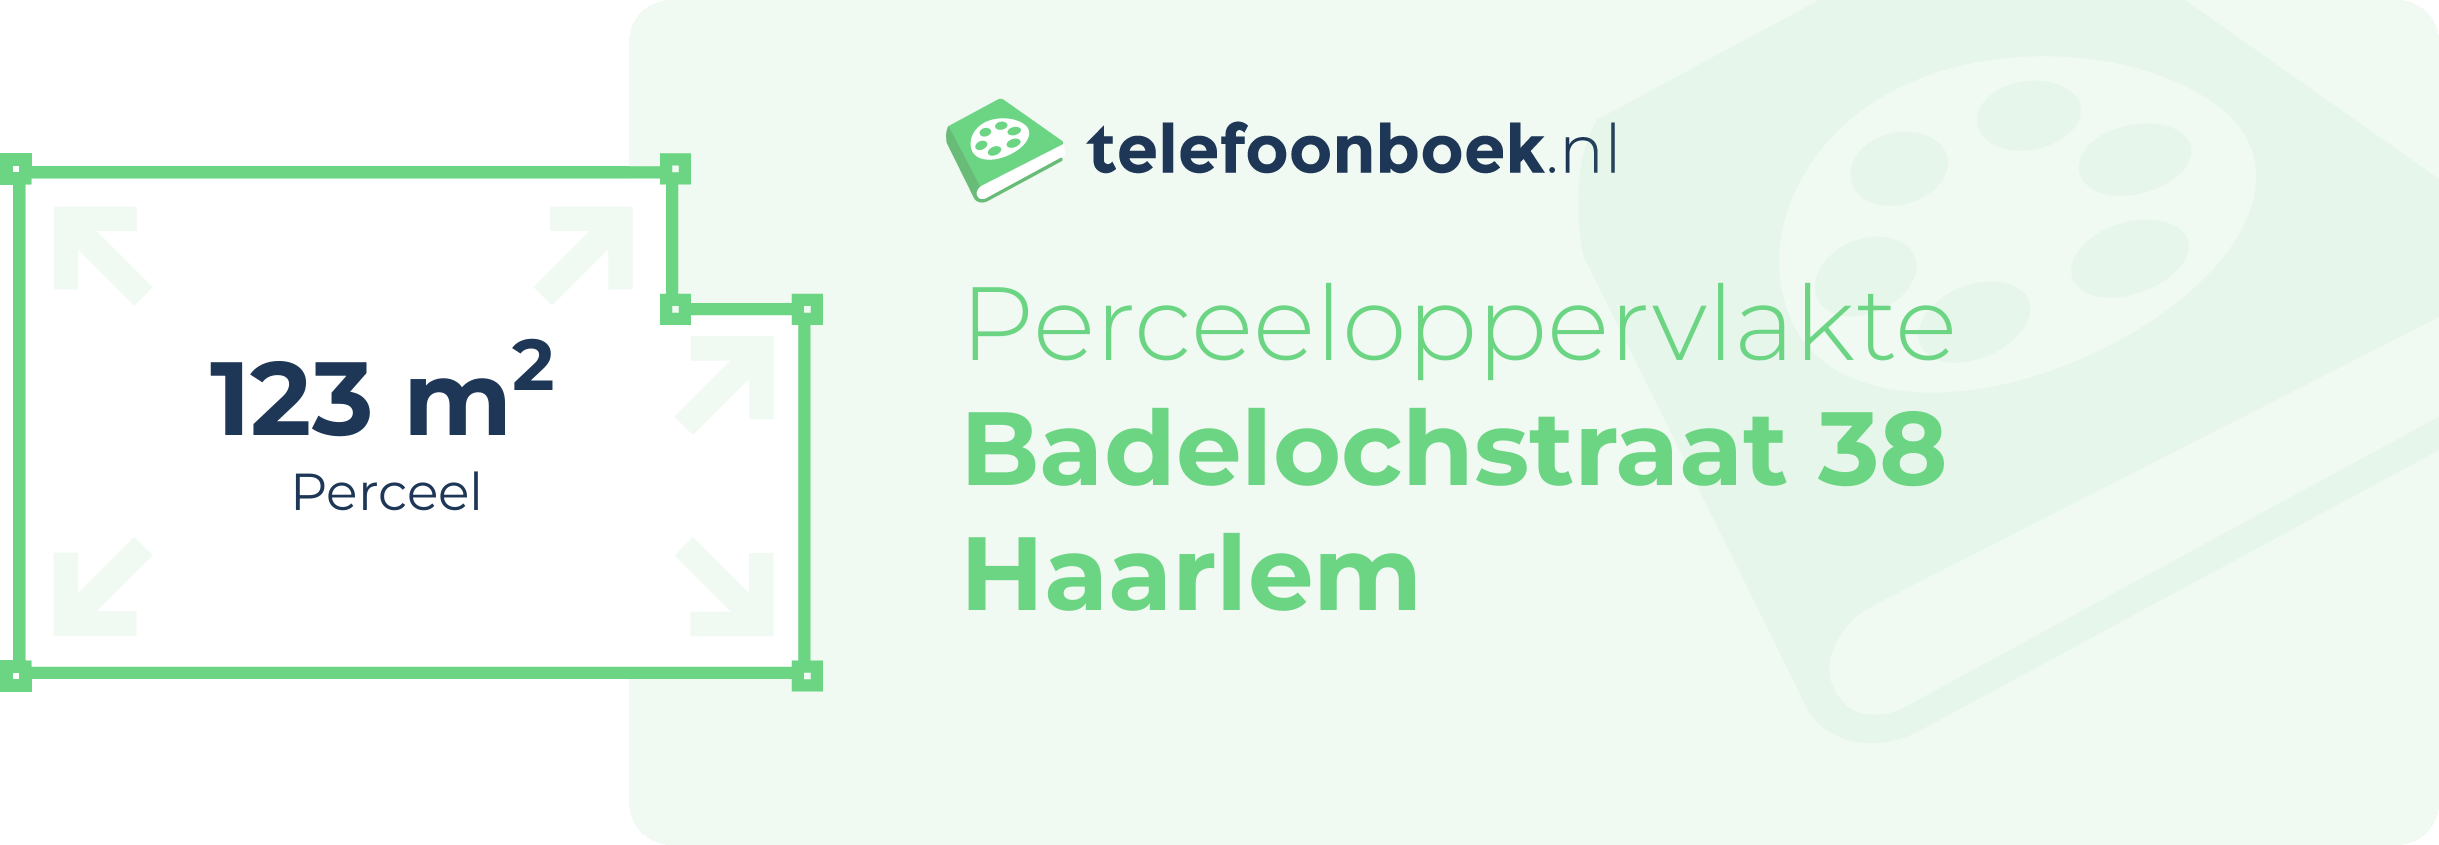 Perceeloppervlakte Badelochstraat 38 Haarlem